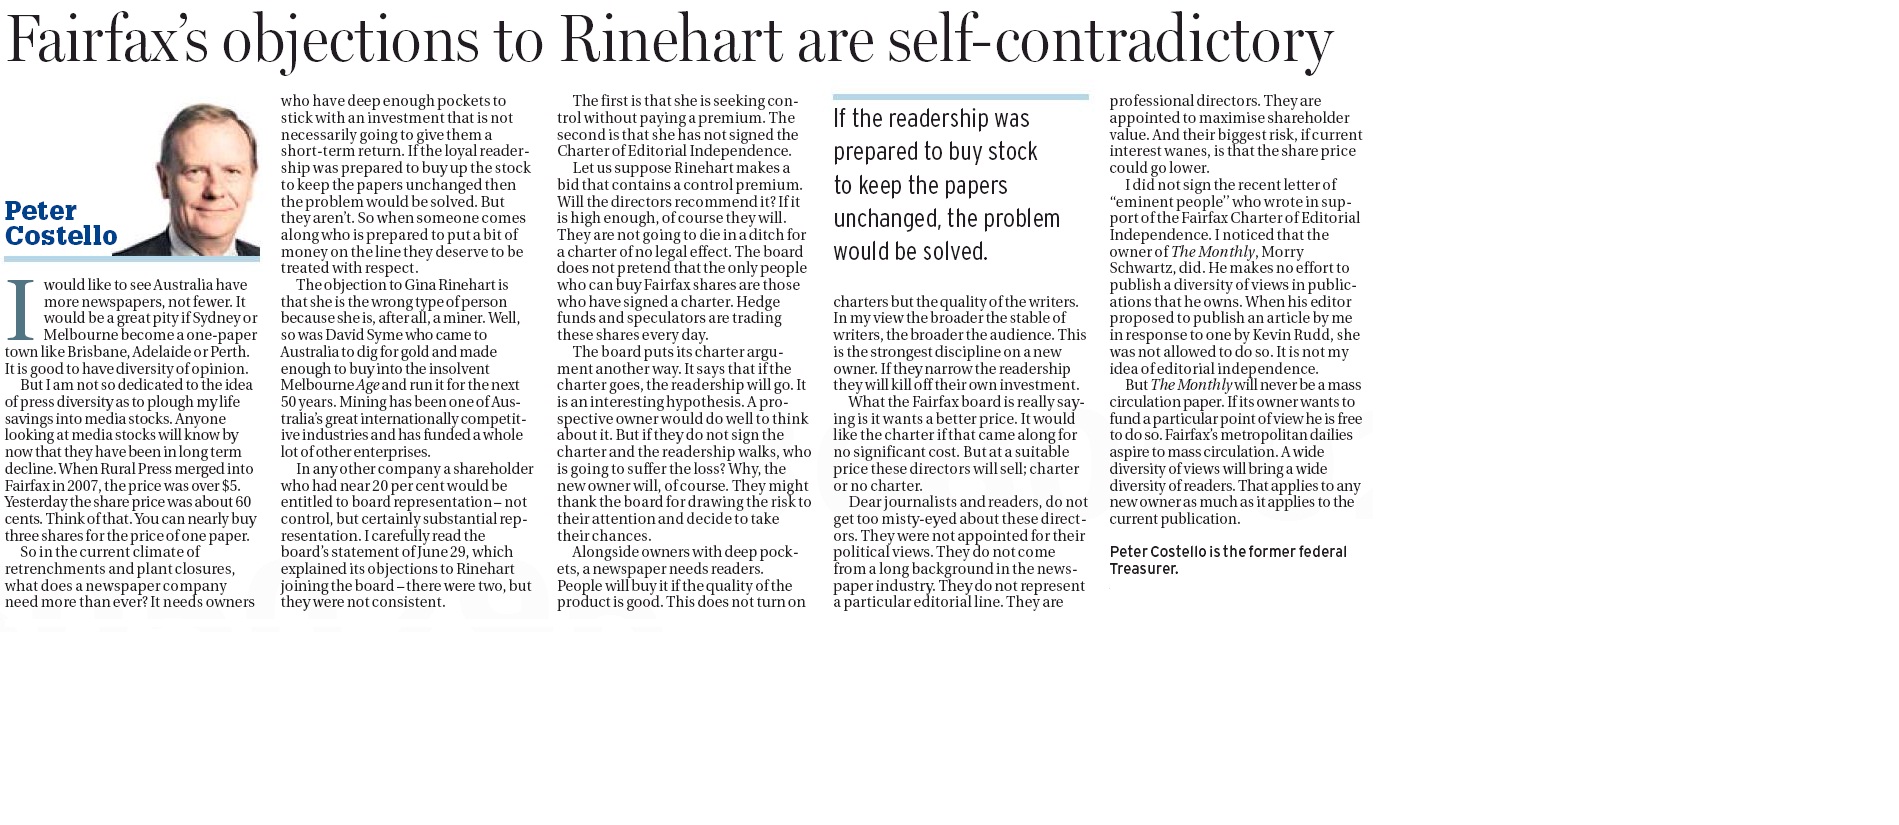 smh_-_fairfaxs_objections_to_rinehart_are_self-contradictory_-_4_july_2012jpg